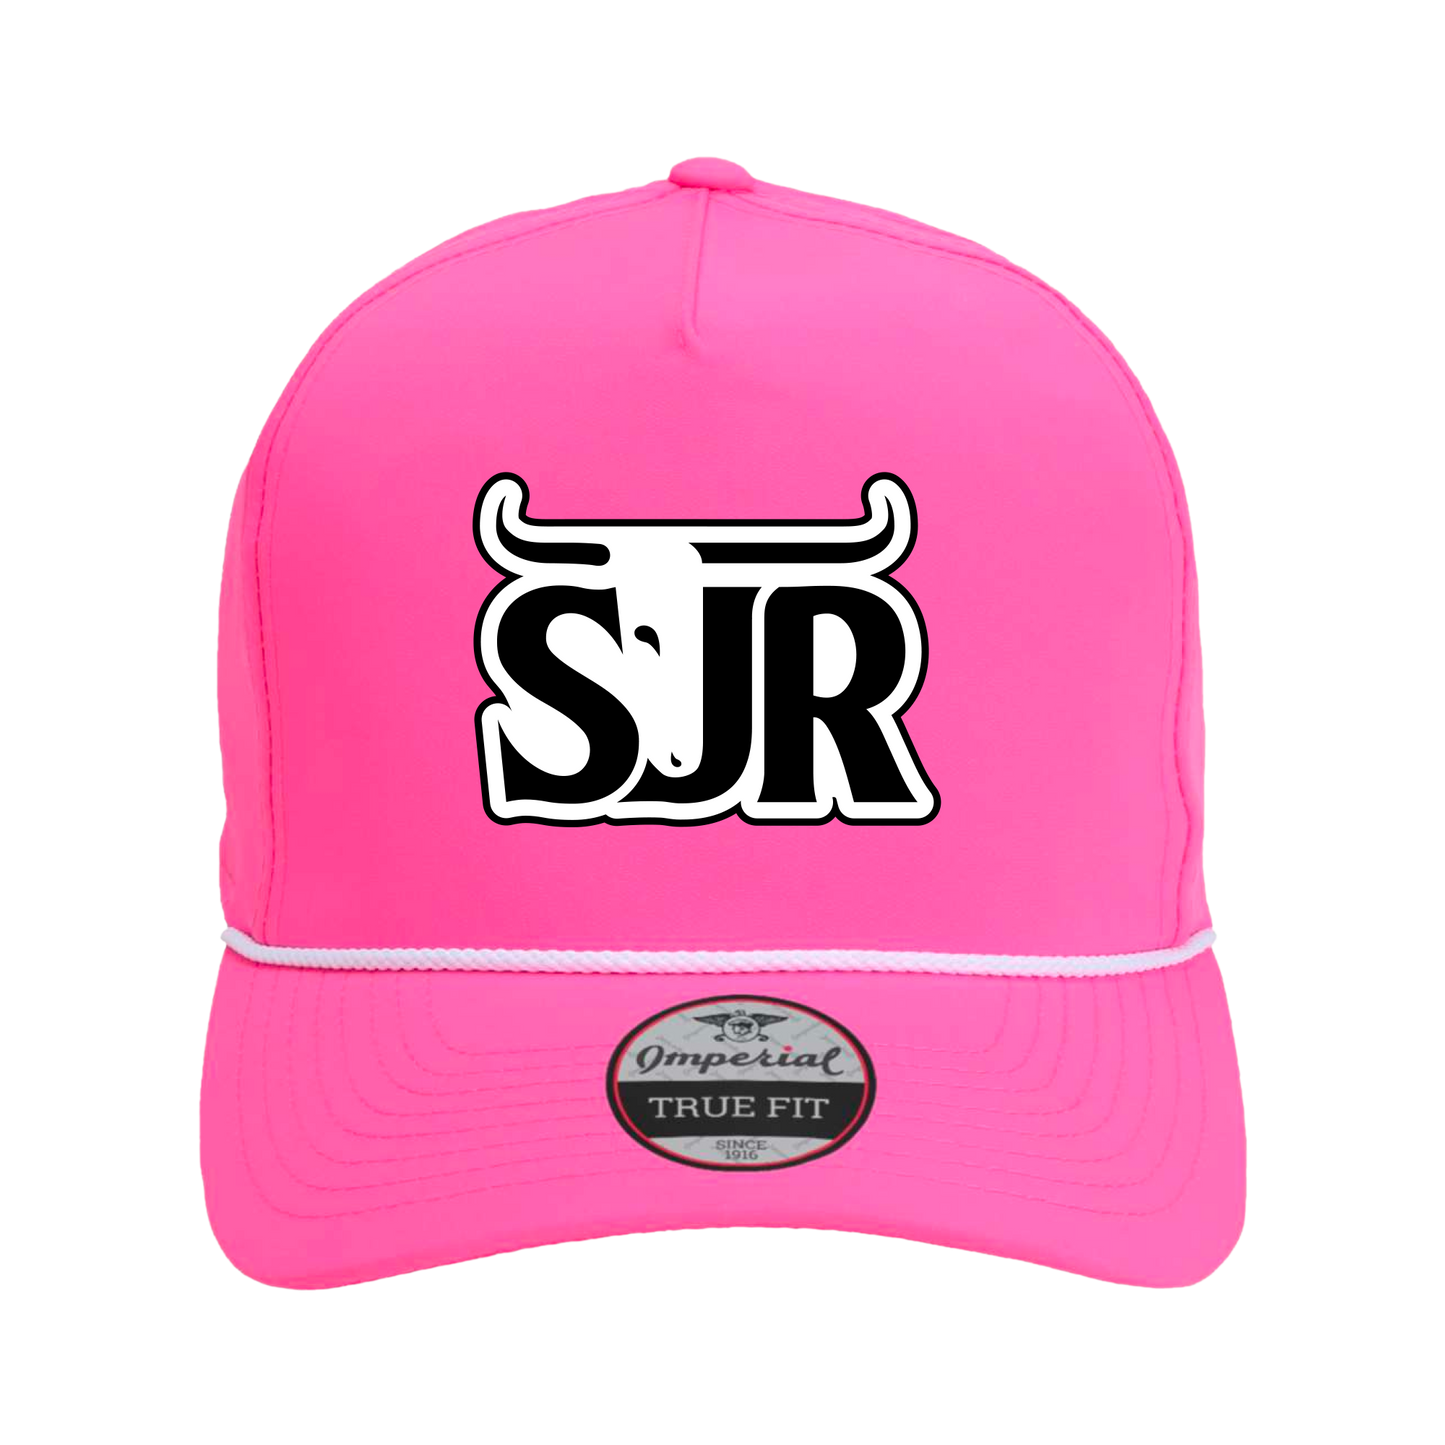 Ranch Rope Hat - Neon Pink – Slide Job Ranch